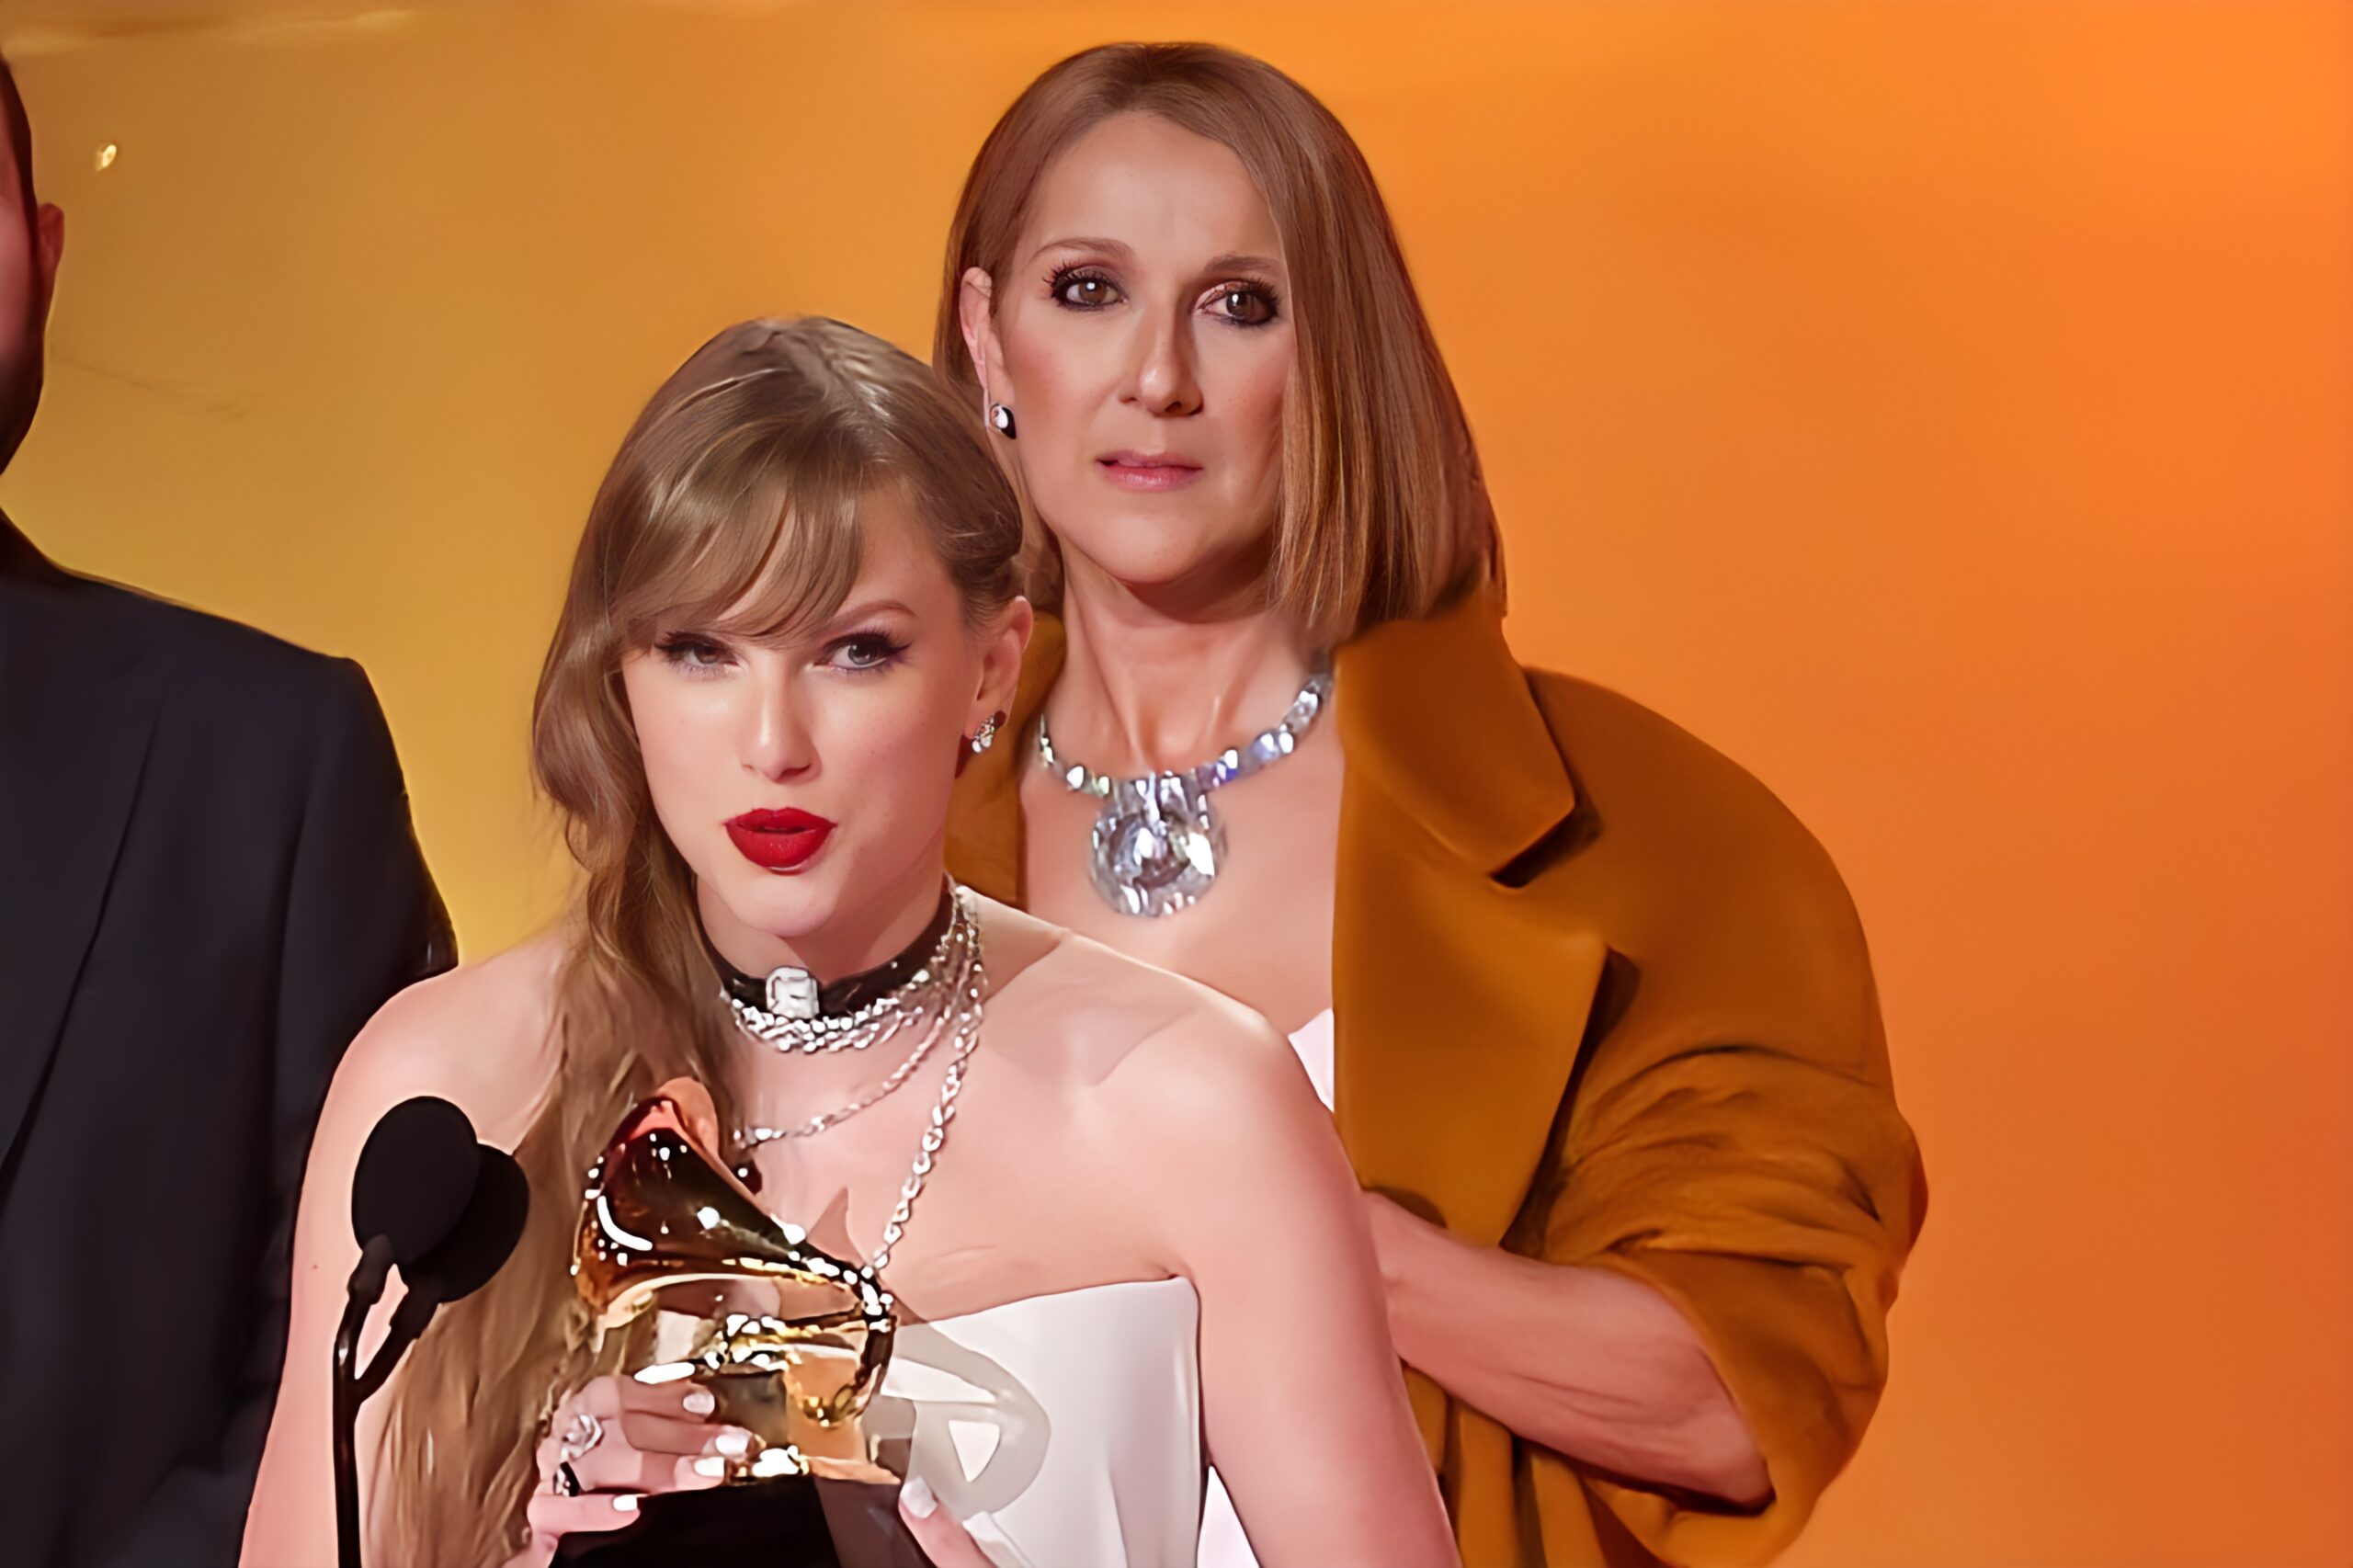 Cérémonie des Grammy Awards Taylor Swift "irrespectueuse" snobe